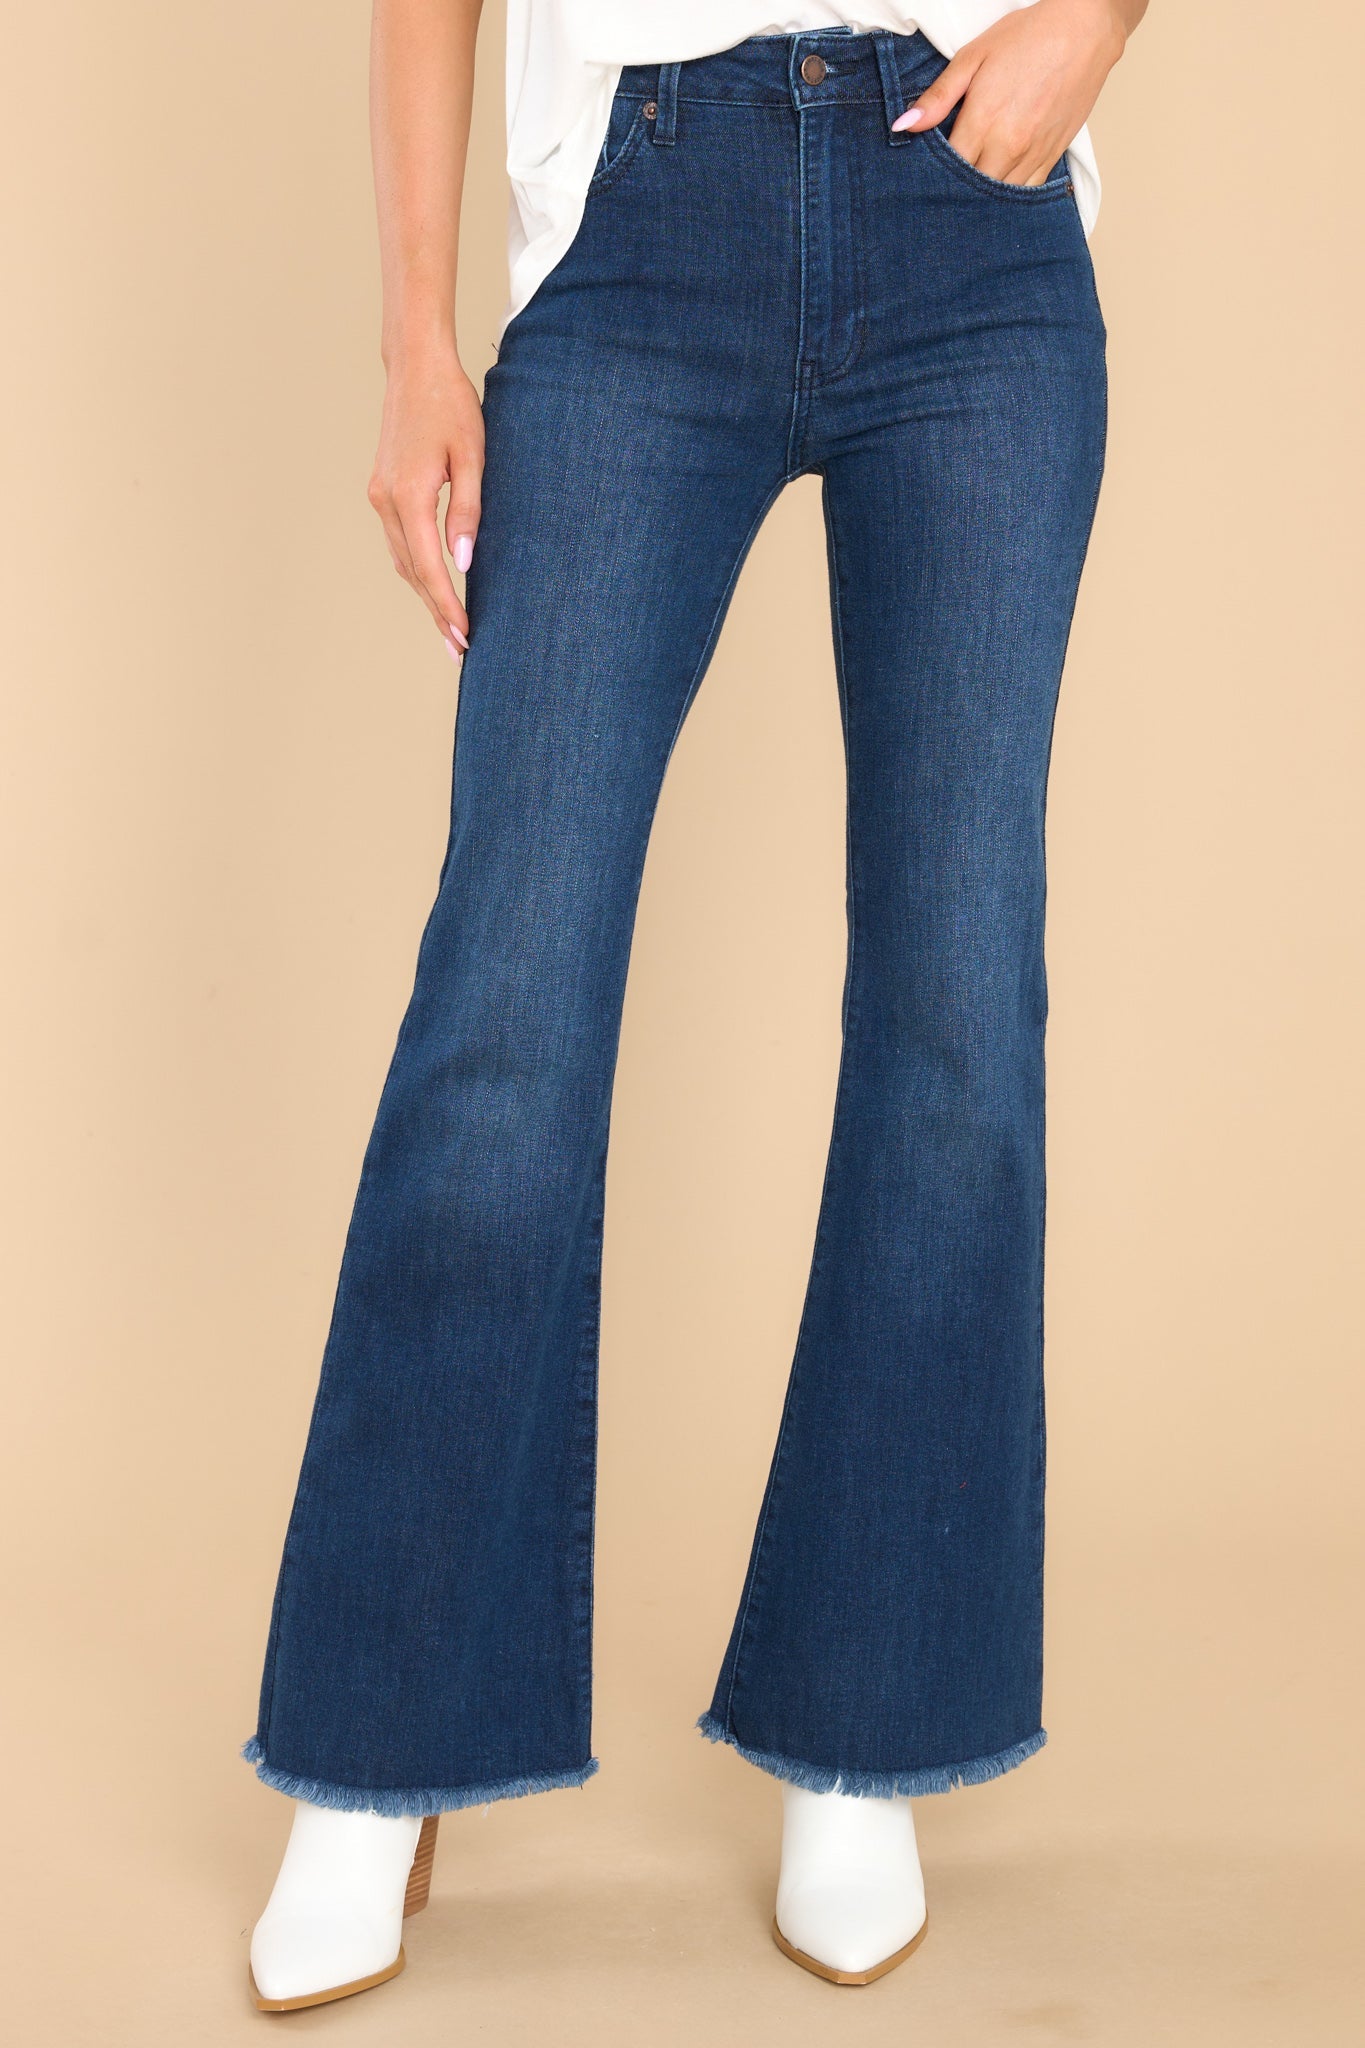 DIY HIGH WAIST PANT IN 5 MINS | Turn regular jeans into high waist Jeans -  YouTube | High waisted pants, High waisted tights, Mid waist pants